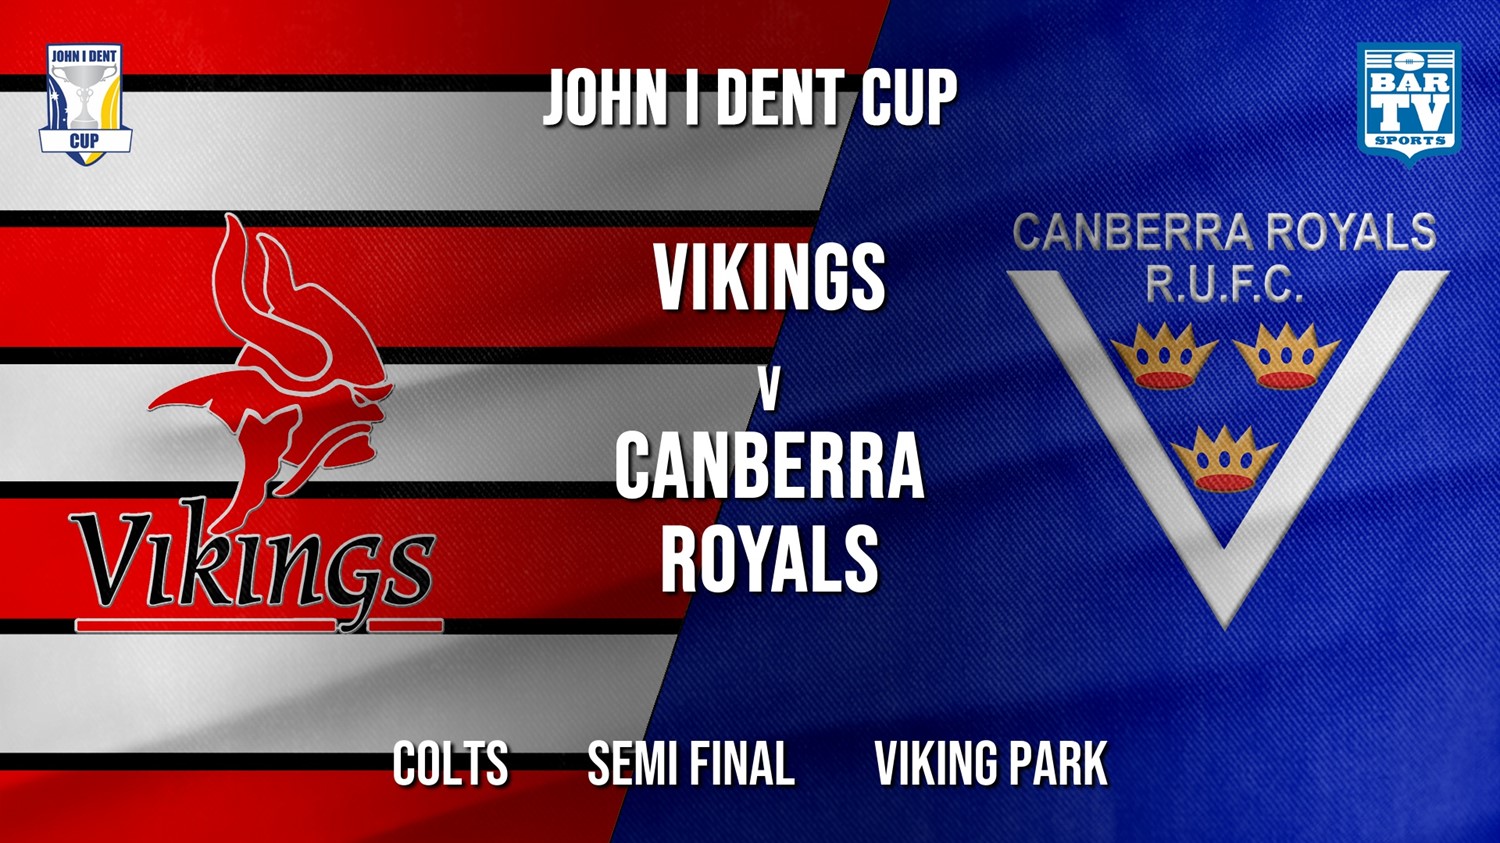 John I Dent Semi Final - Colts - Tuggeranong Vikings v Canberra Royals Minigame Slate Image